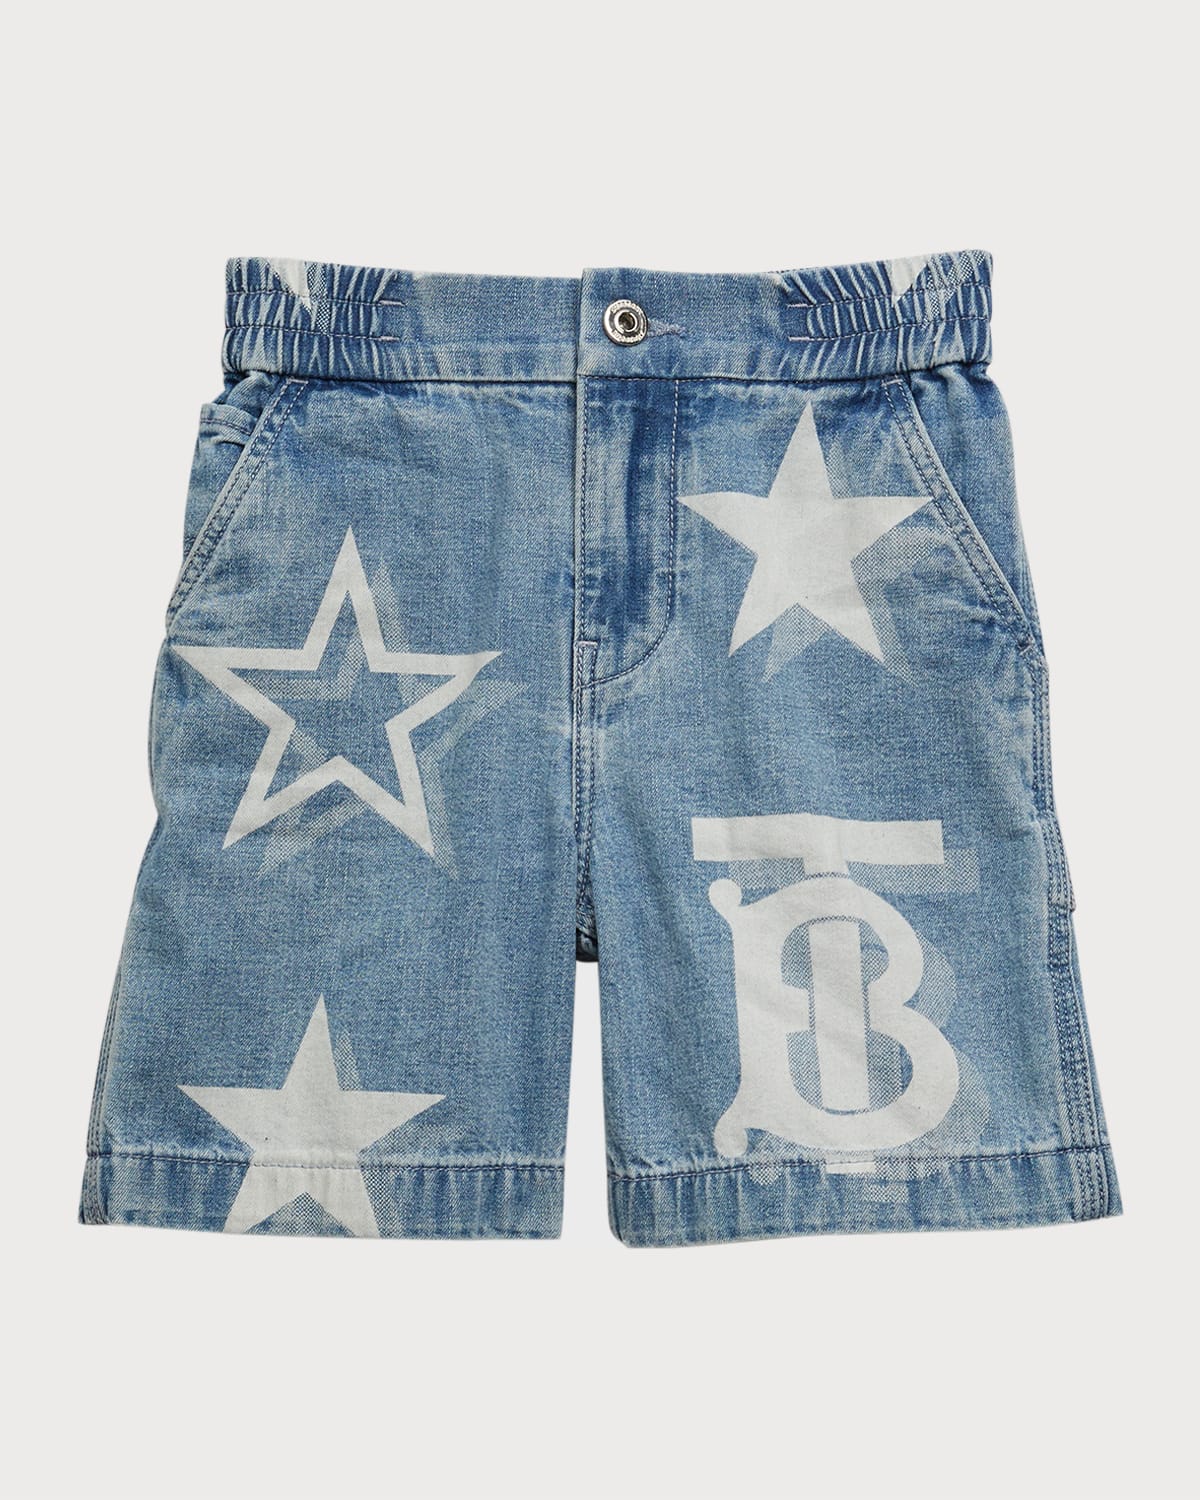 Burberry Djano TB Star Denim Shorts, Size 3-14